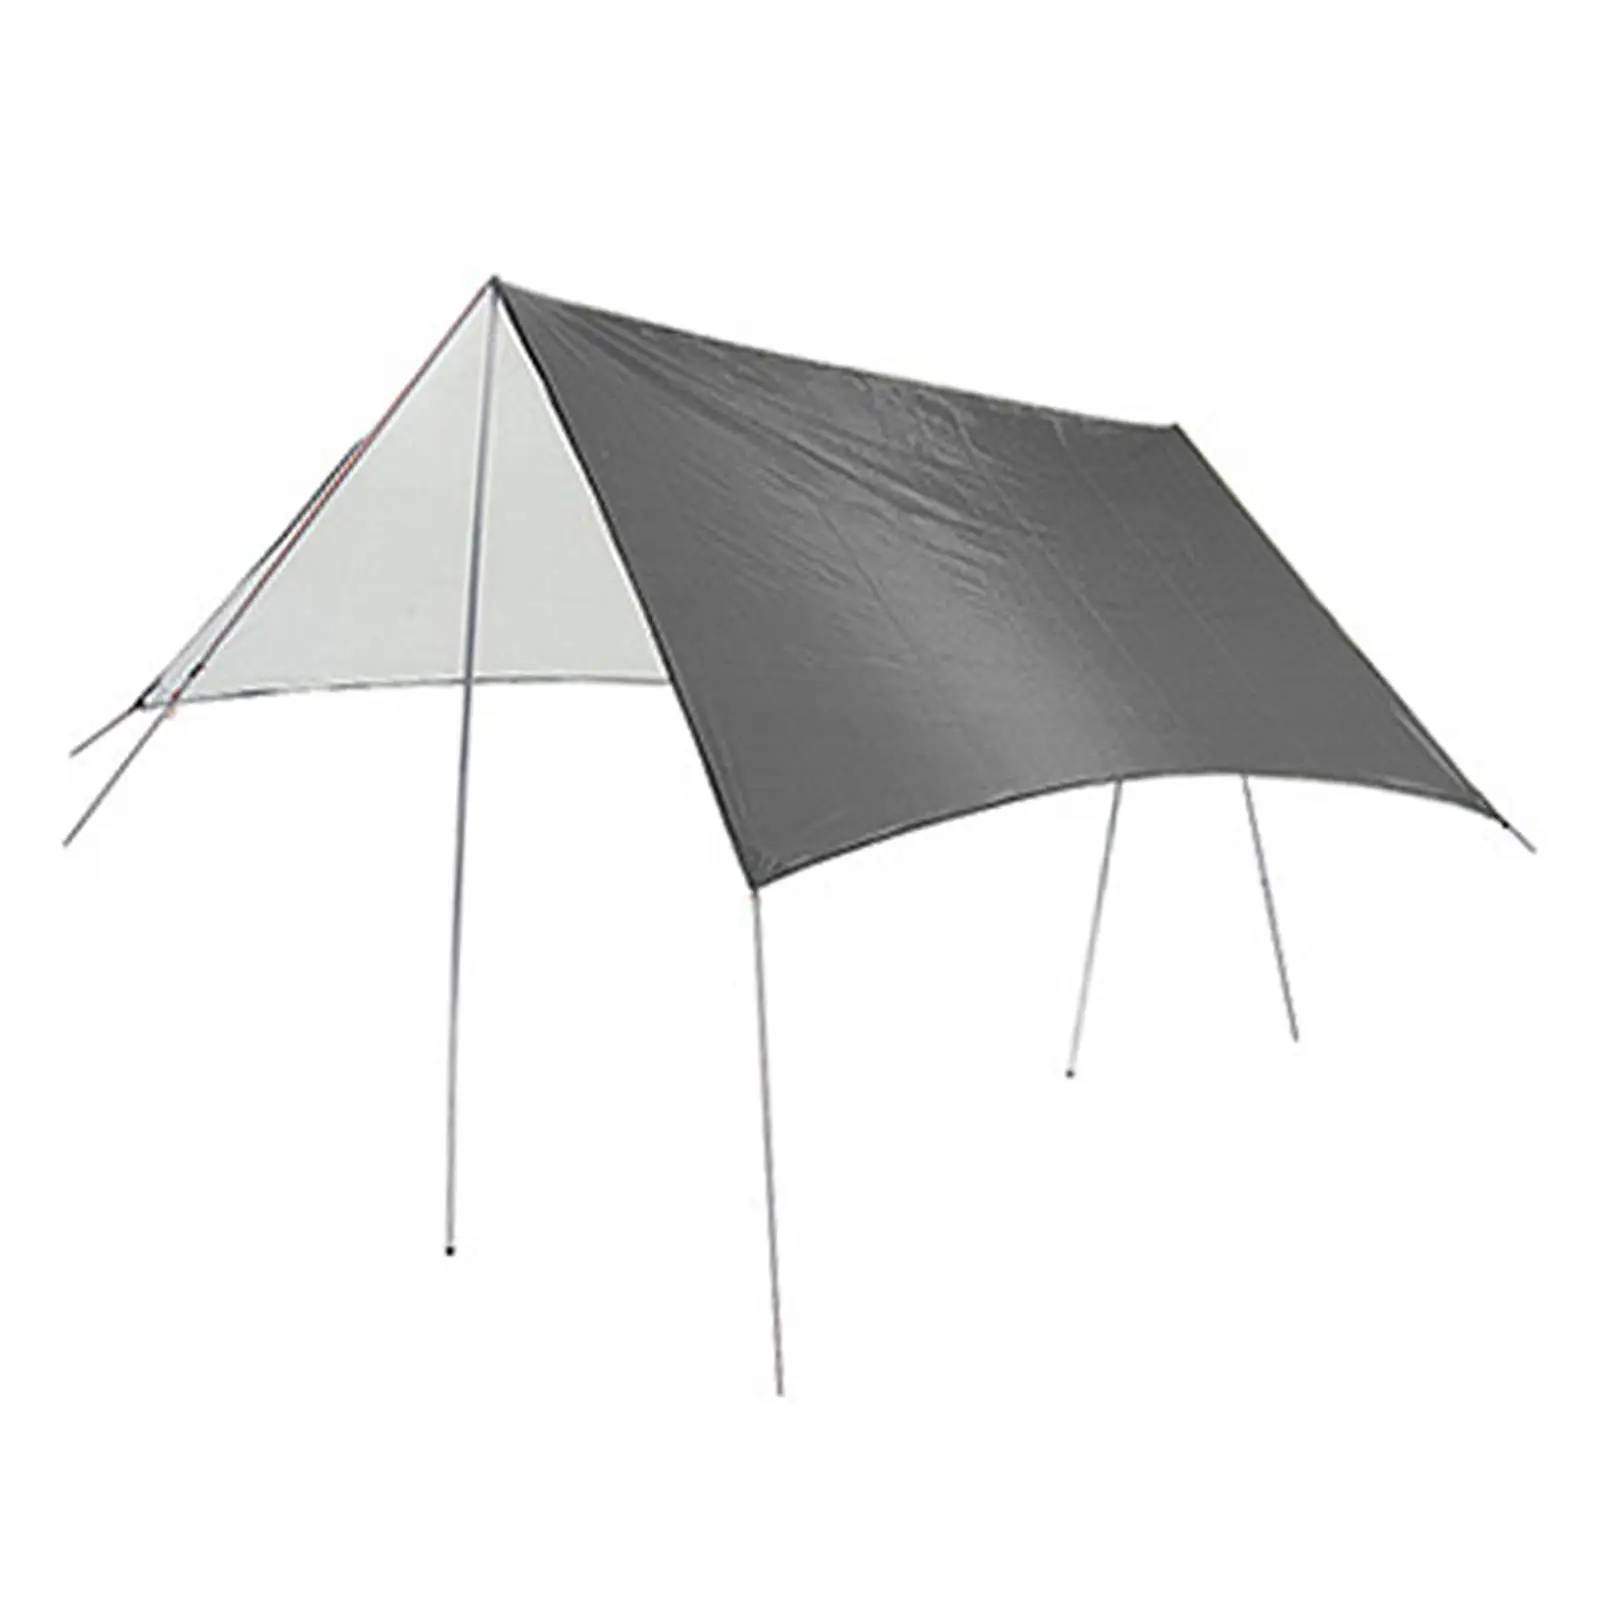 Camping Tarp Waterproof Tent Multifunctional Awning Picnic Mat for Hammock Tourist Beach Camping Hiking Ultralight Backpacking